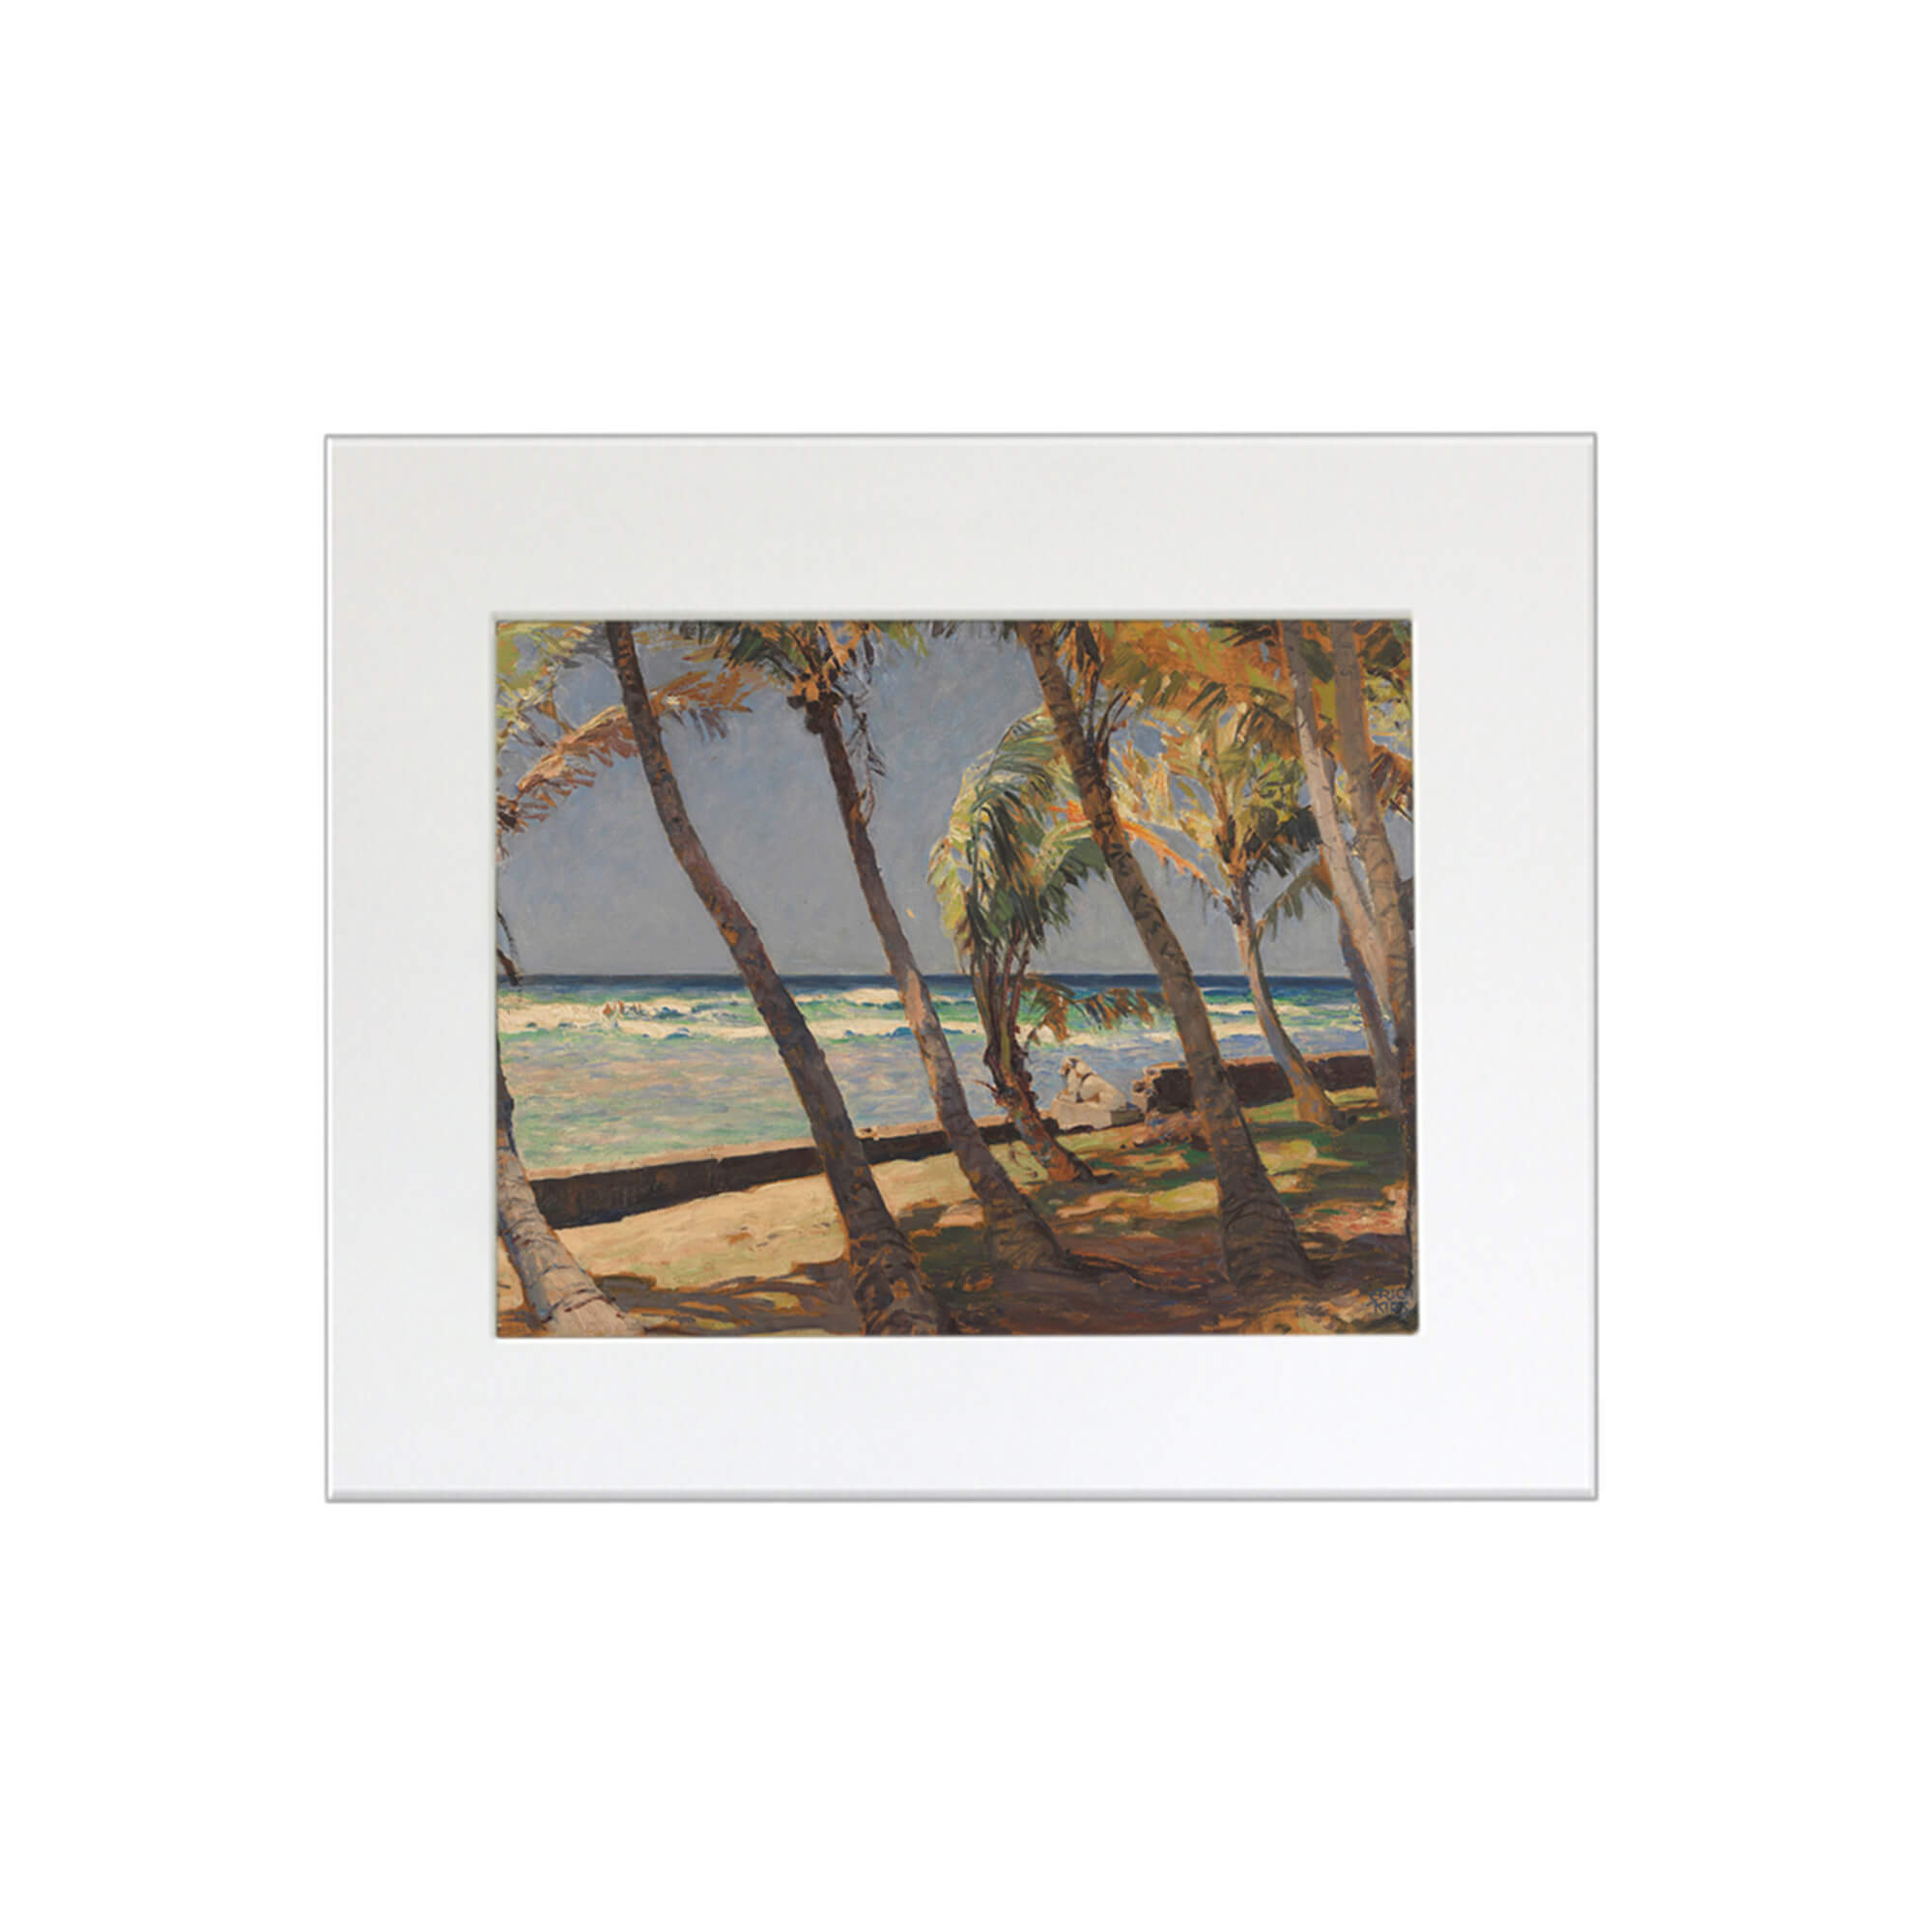 Coconut trees framing a teal-hued ocean view